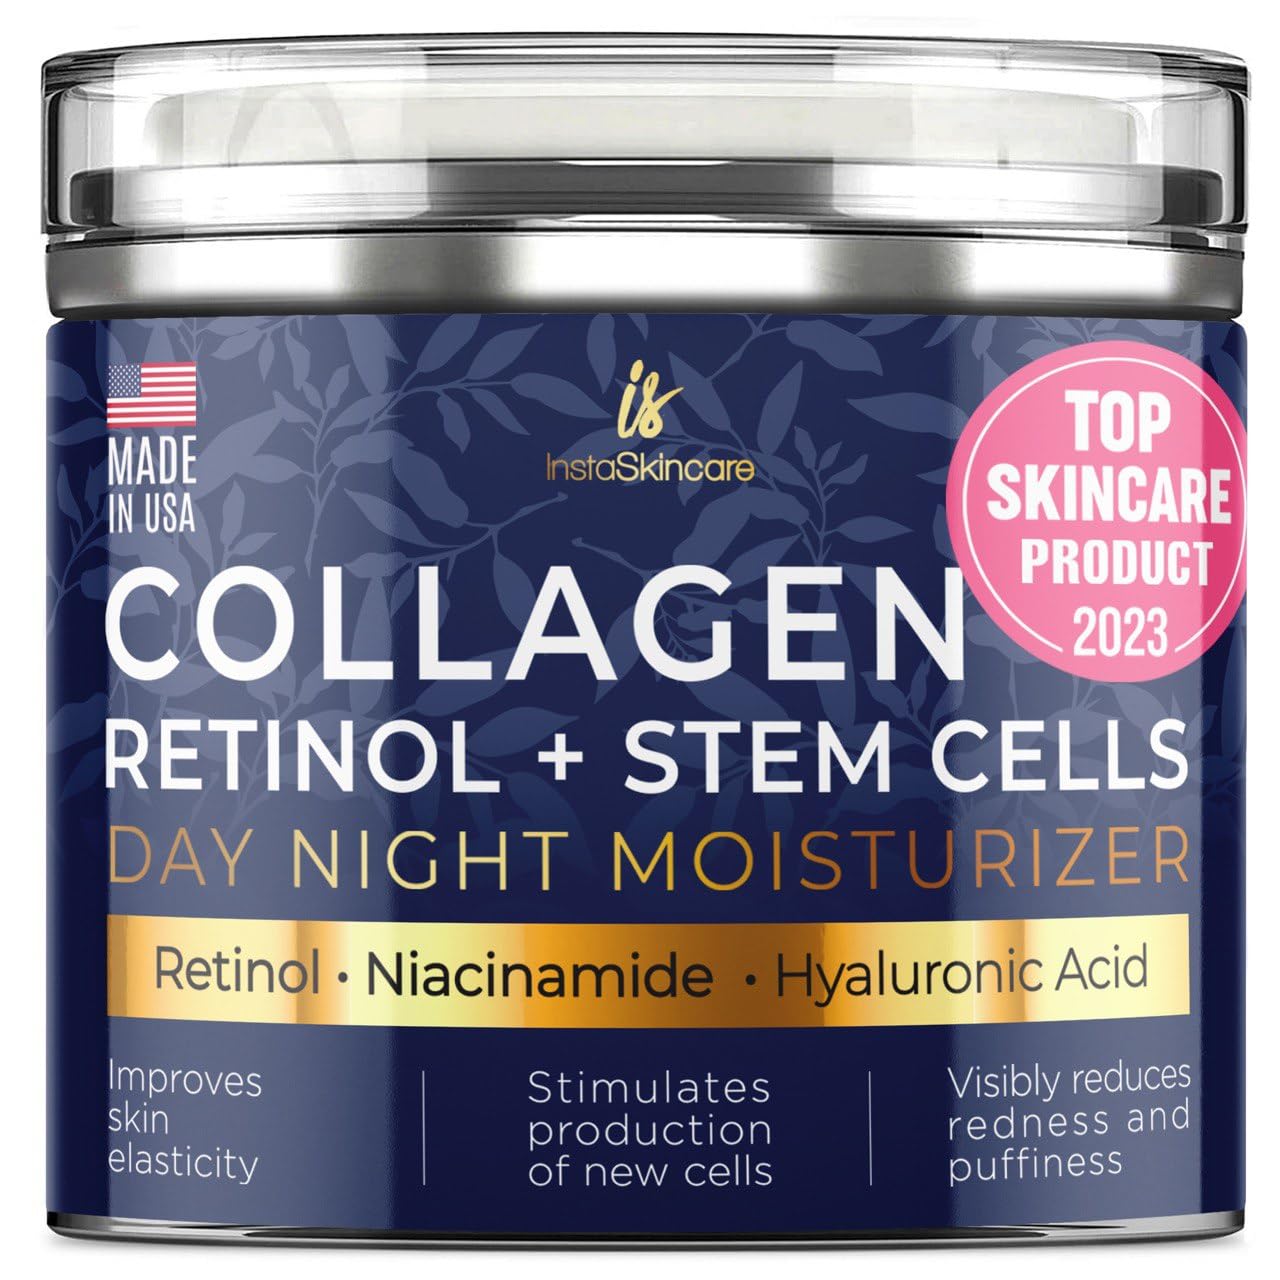 Collagen Face Cream with Airless Pump Collagen Botanical Stem Cells Cream for Skin with Retinol, Nia